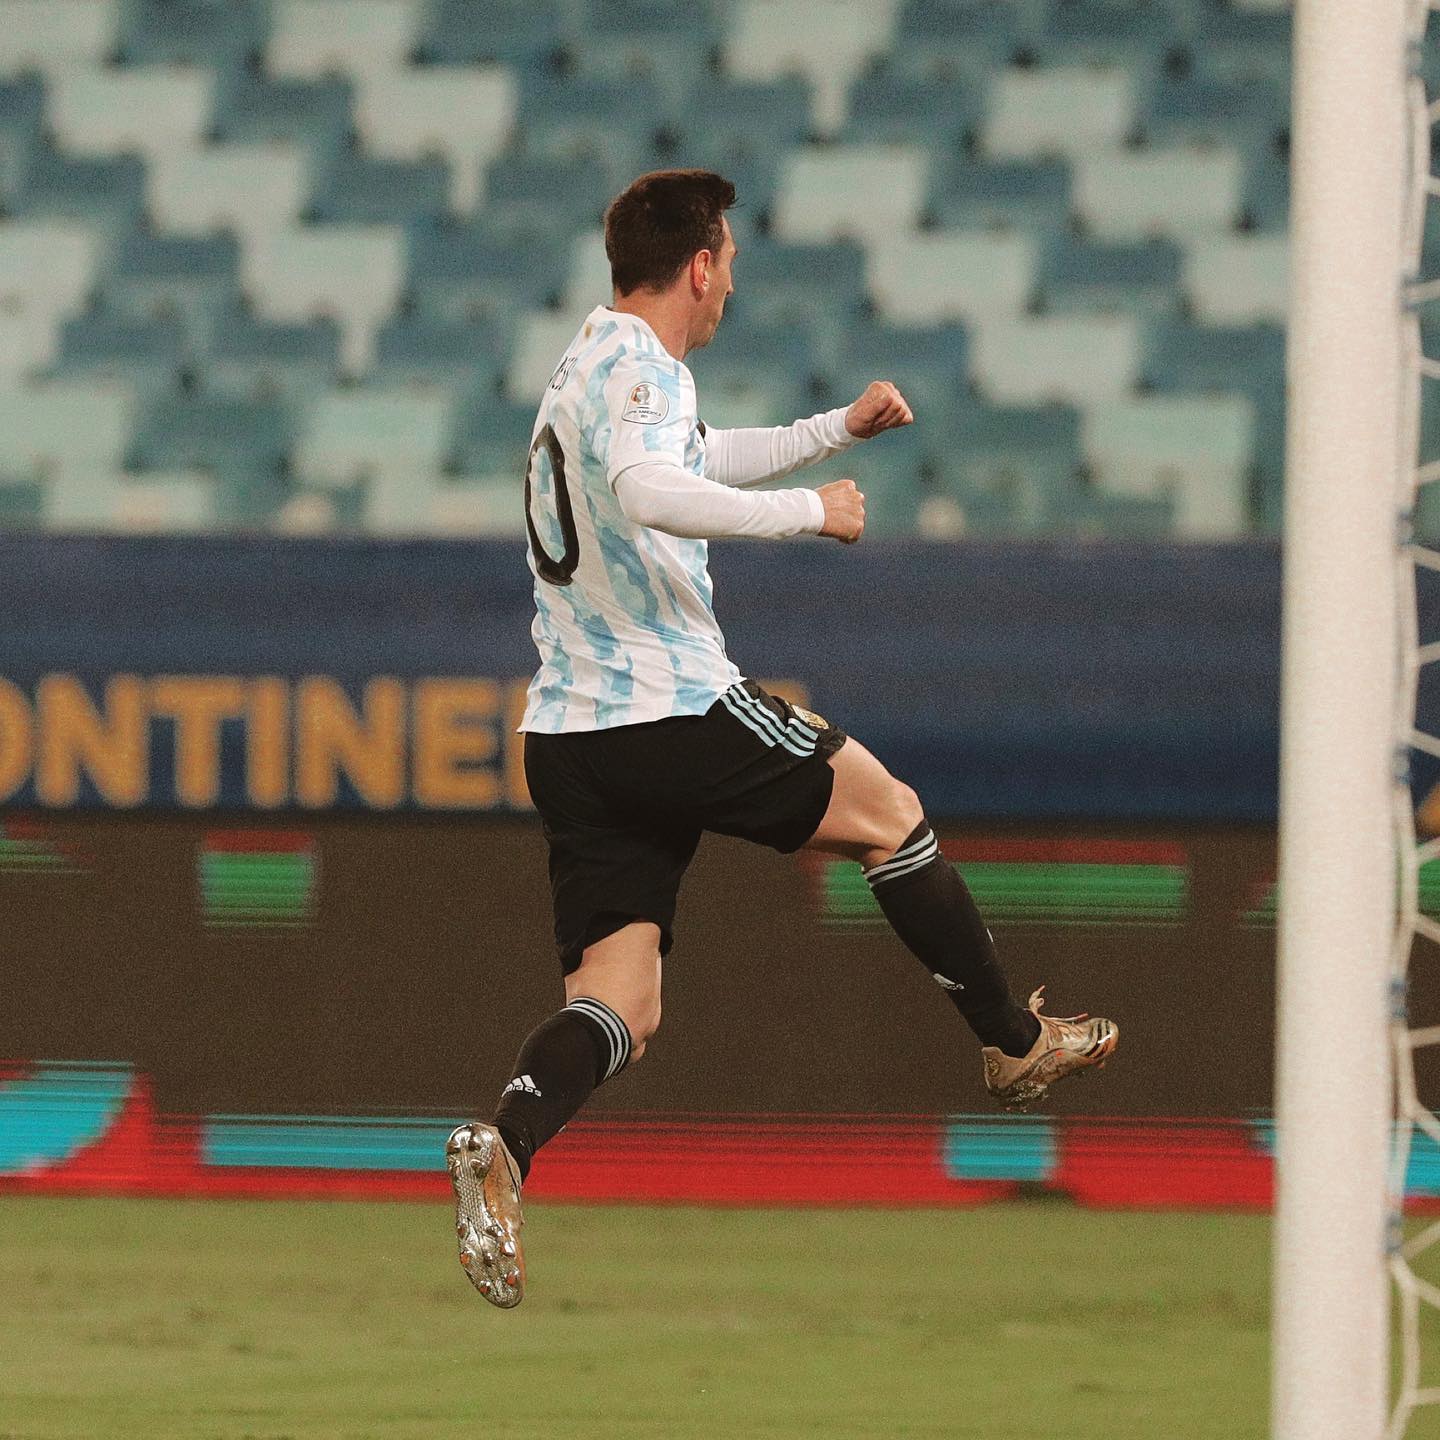 Lionel Messi to wear Golden Boot against Saudi Arabia